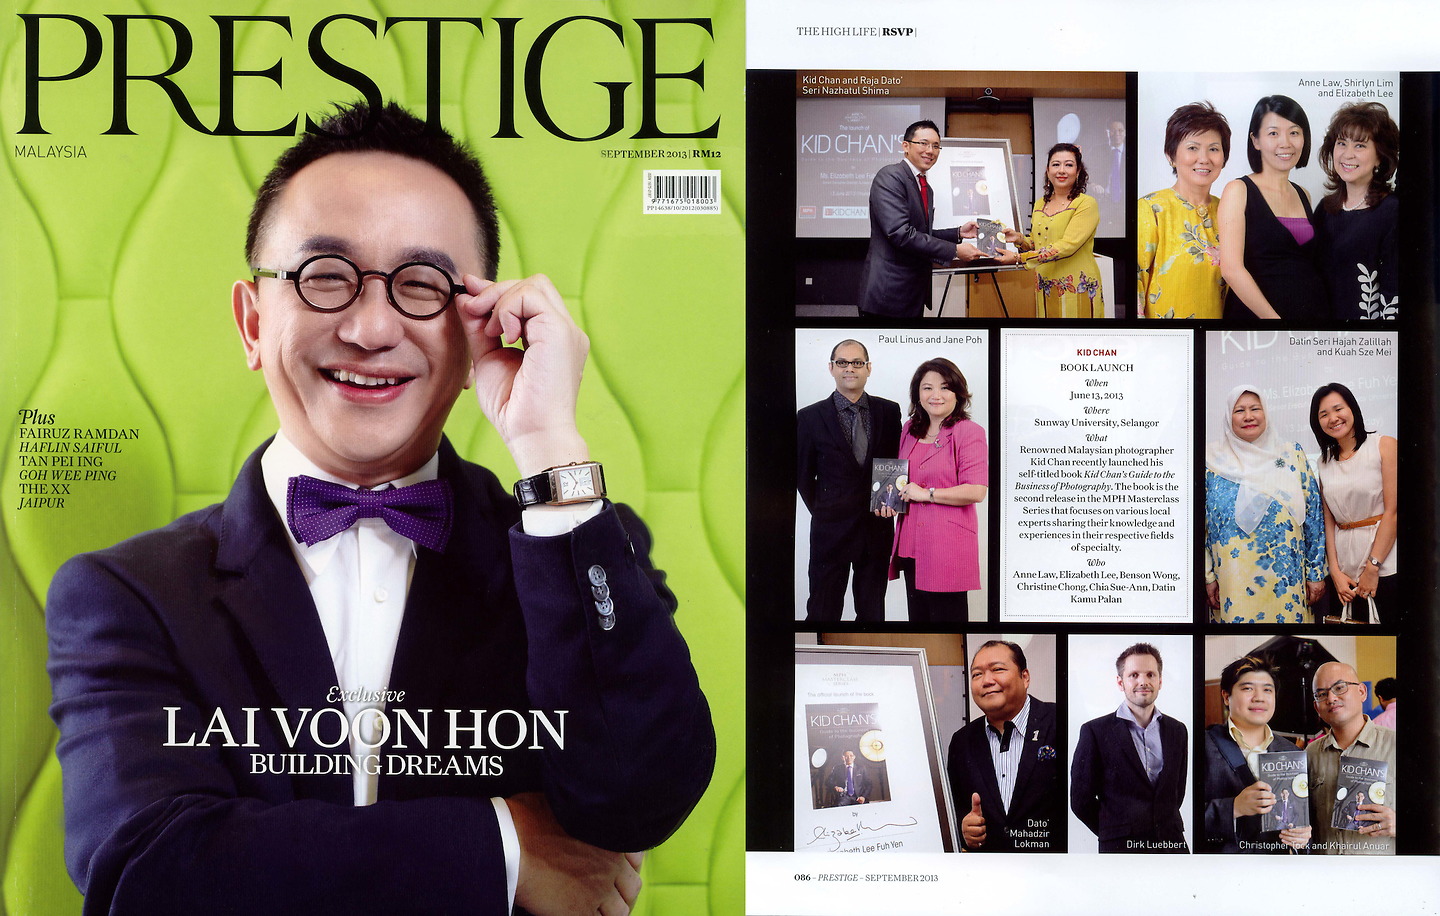 Prestige September 2013: Features Kid Chan